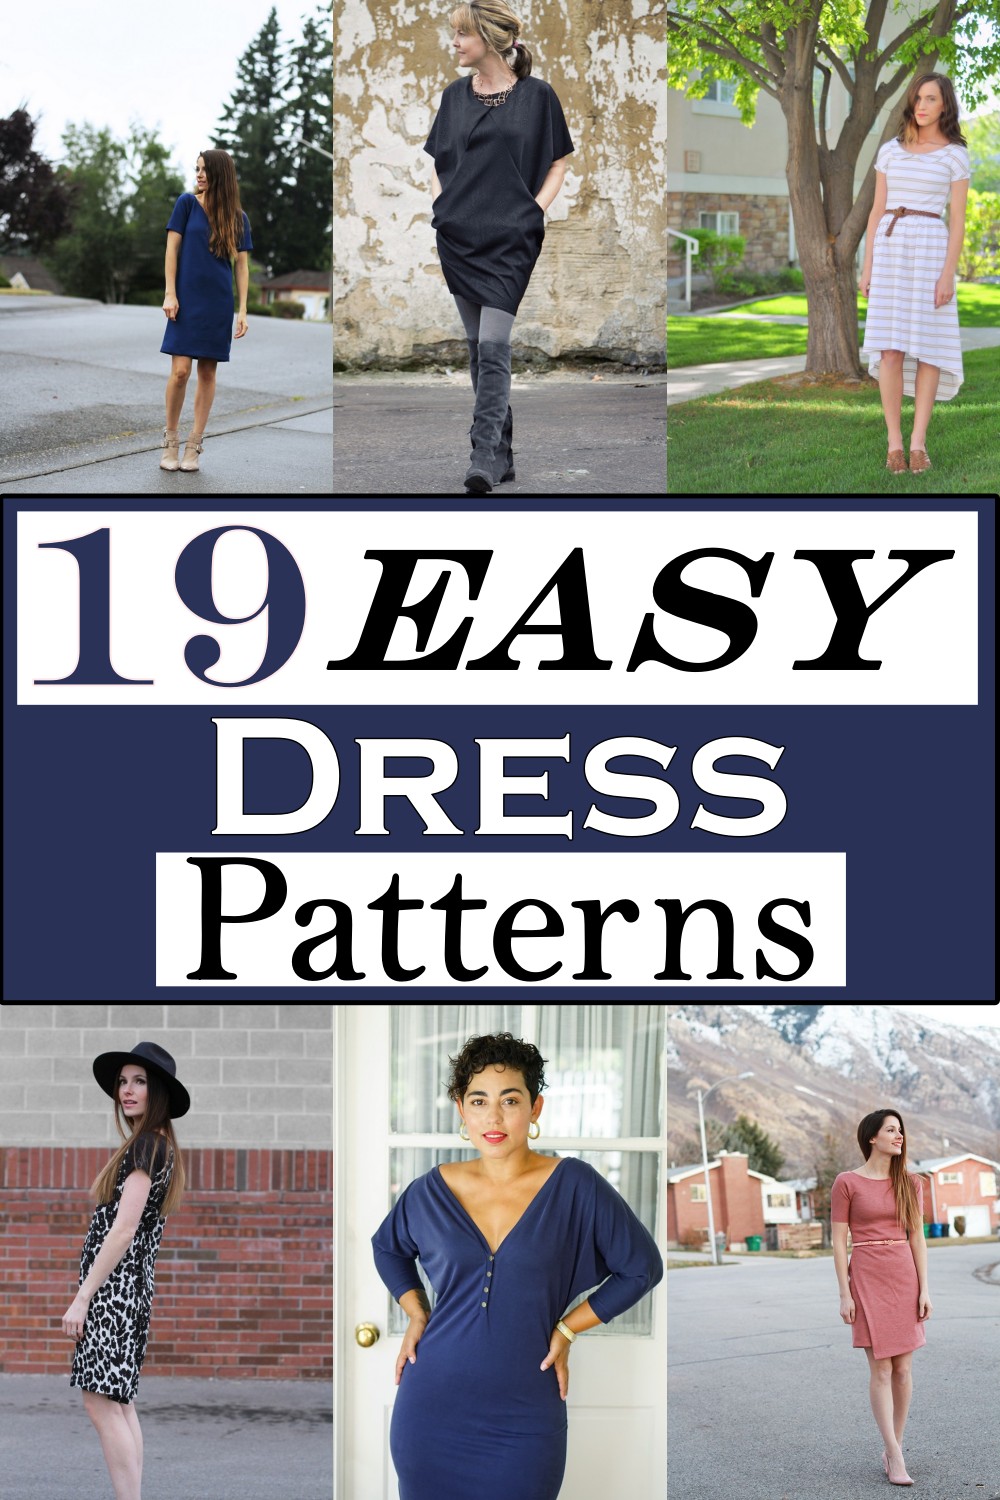 Easy Dress Patterns 1